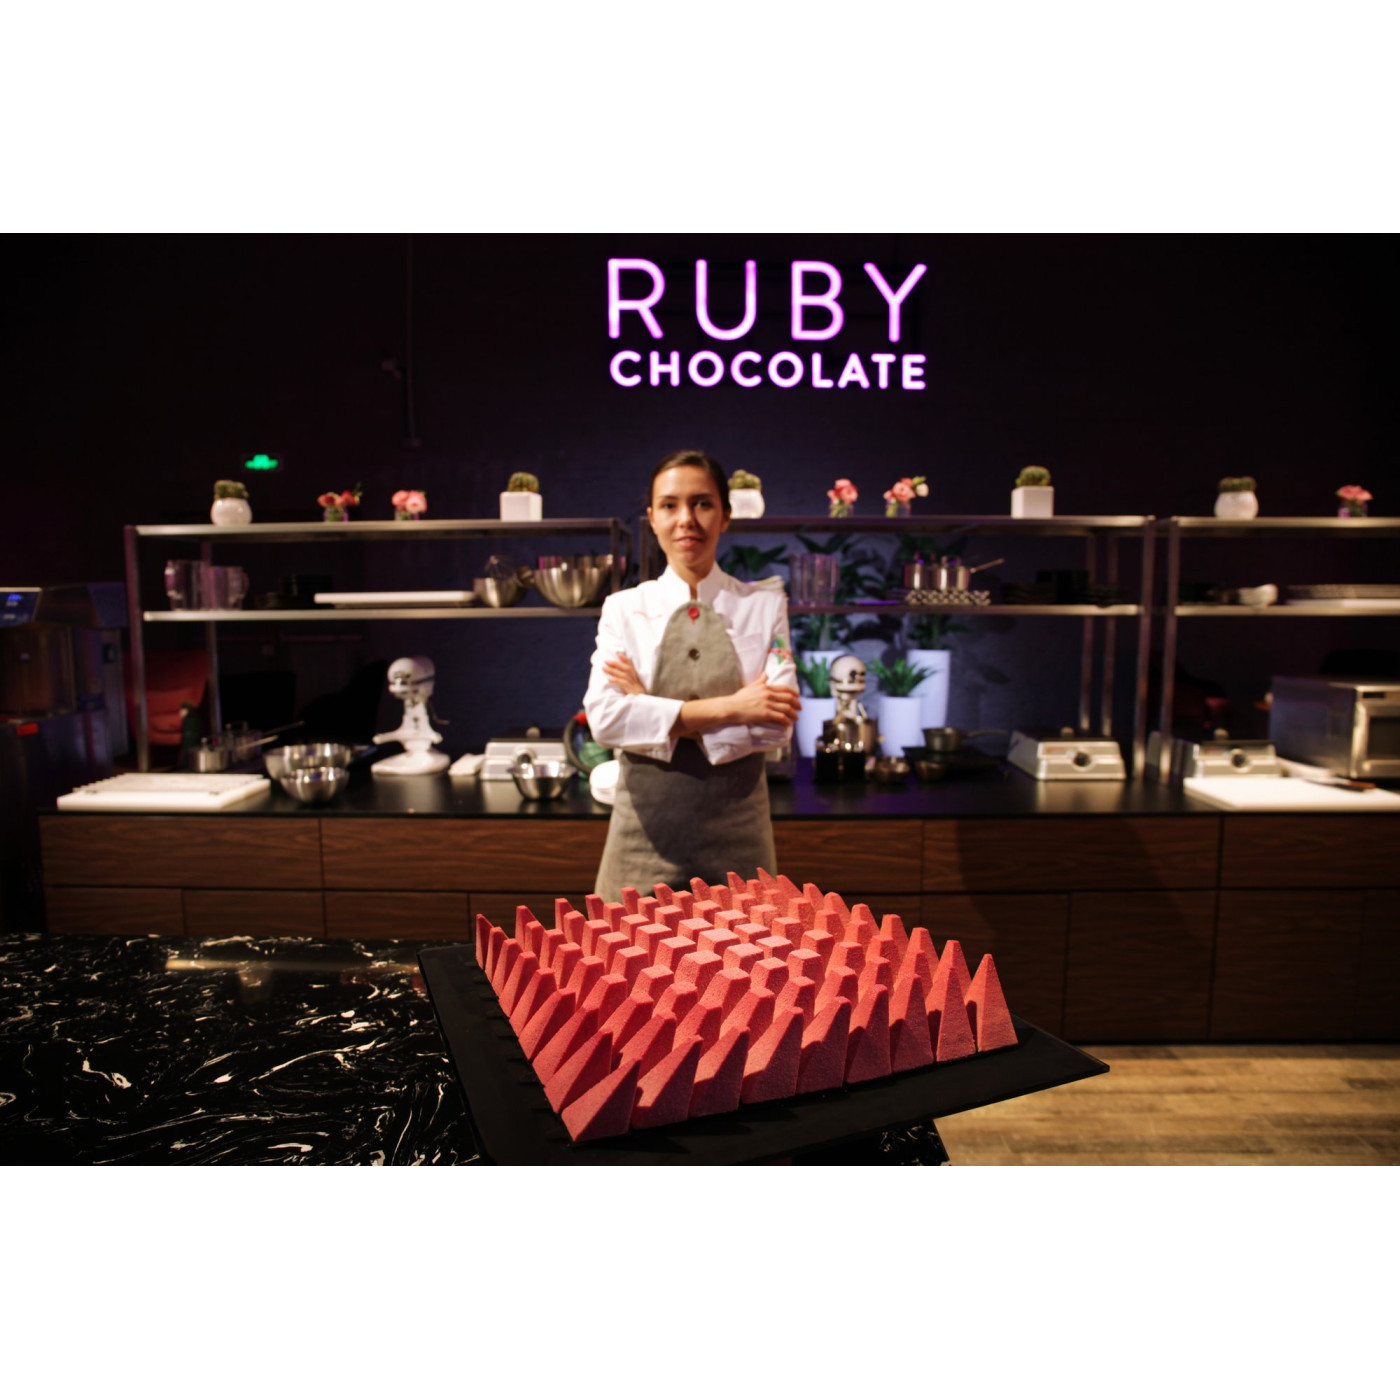 RUBY Chocolate, Shanghai 2017